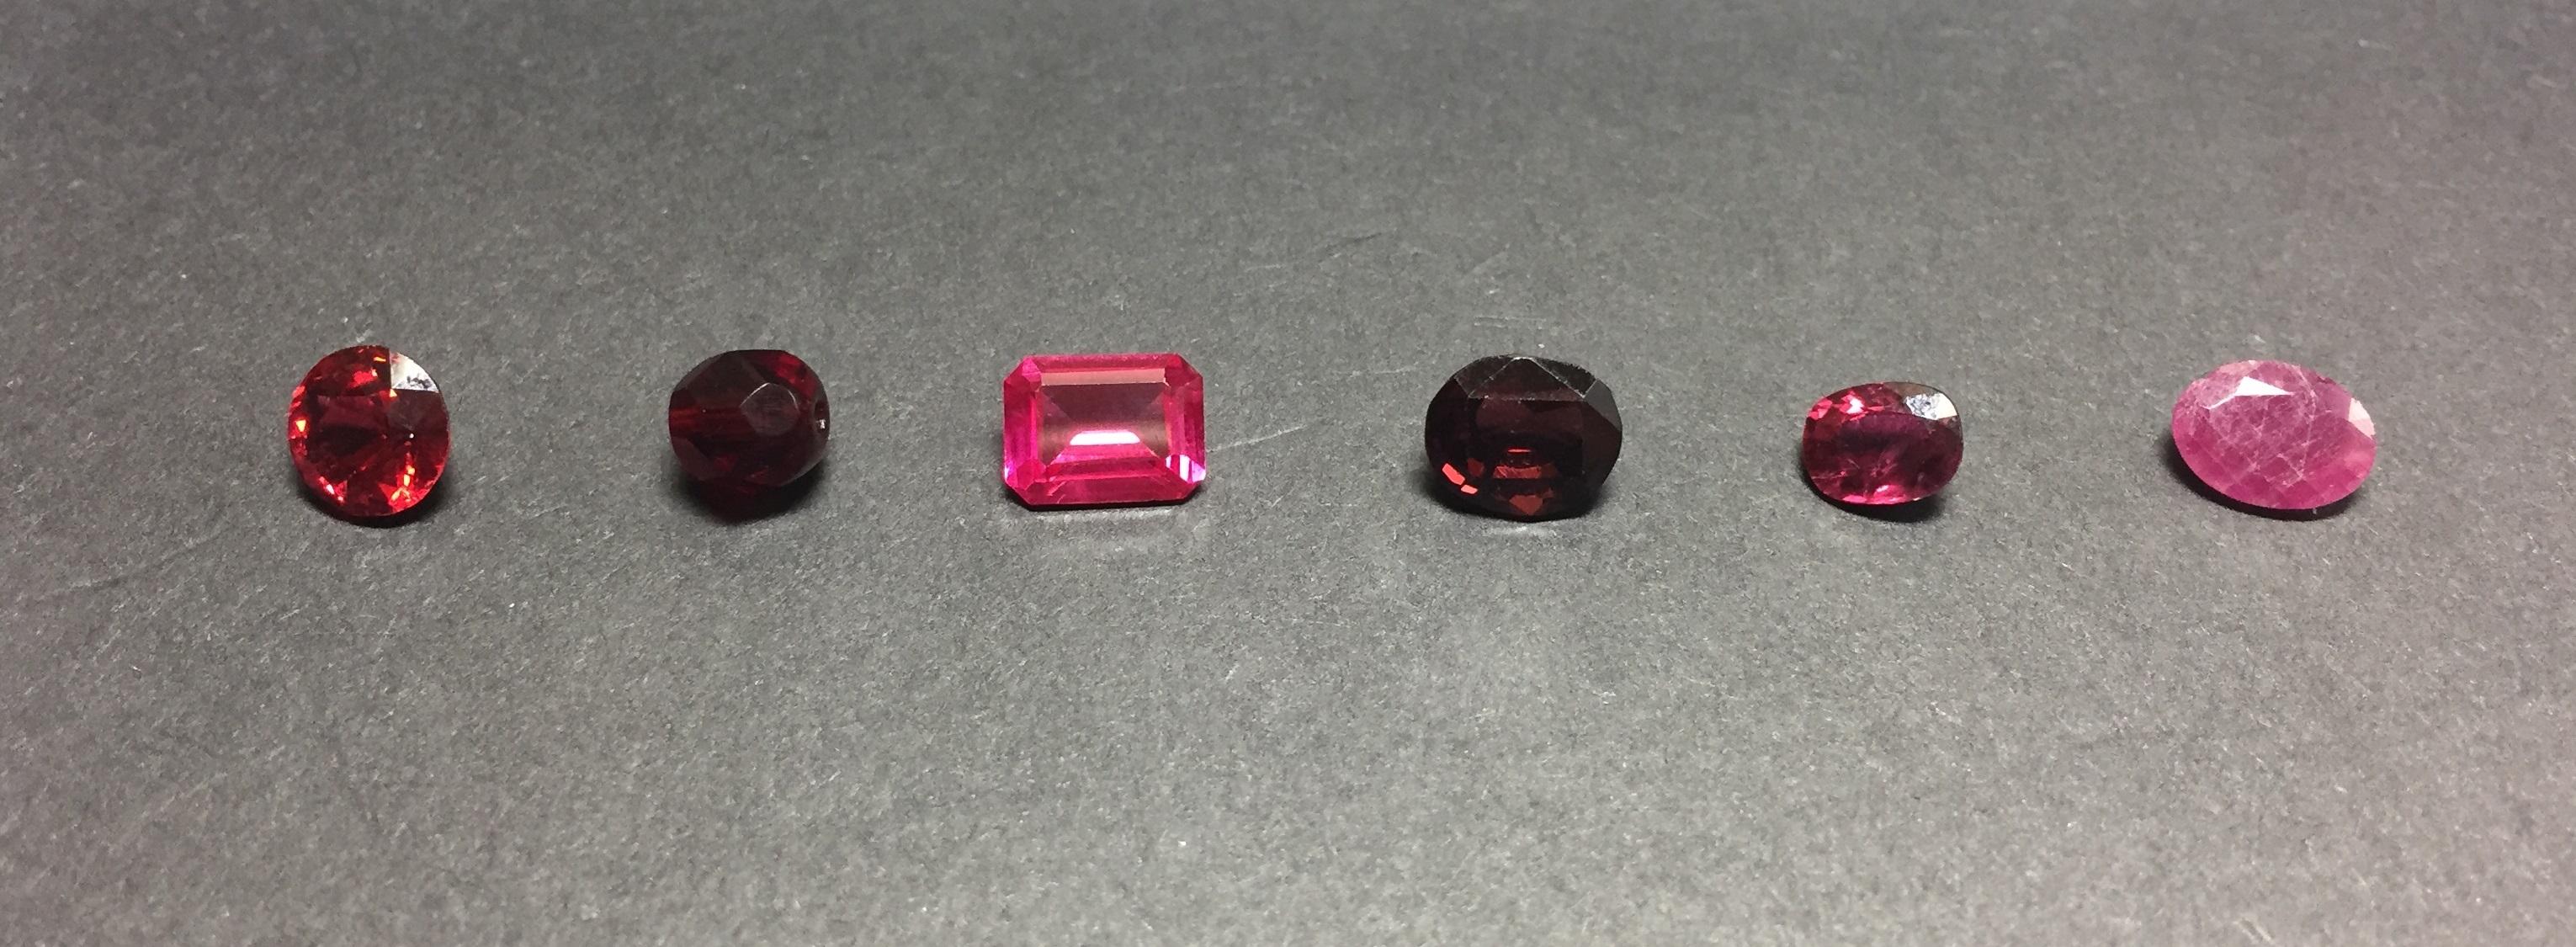 Diamond tester with uv ultraviolet light gemstone jewellry